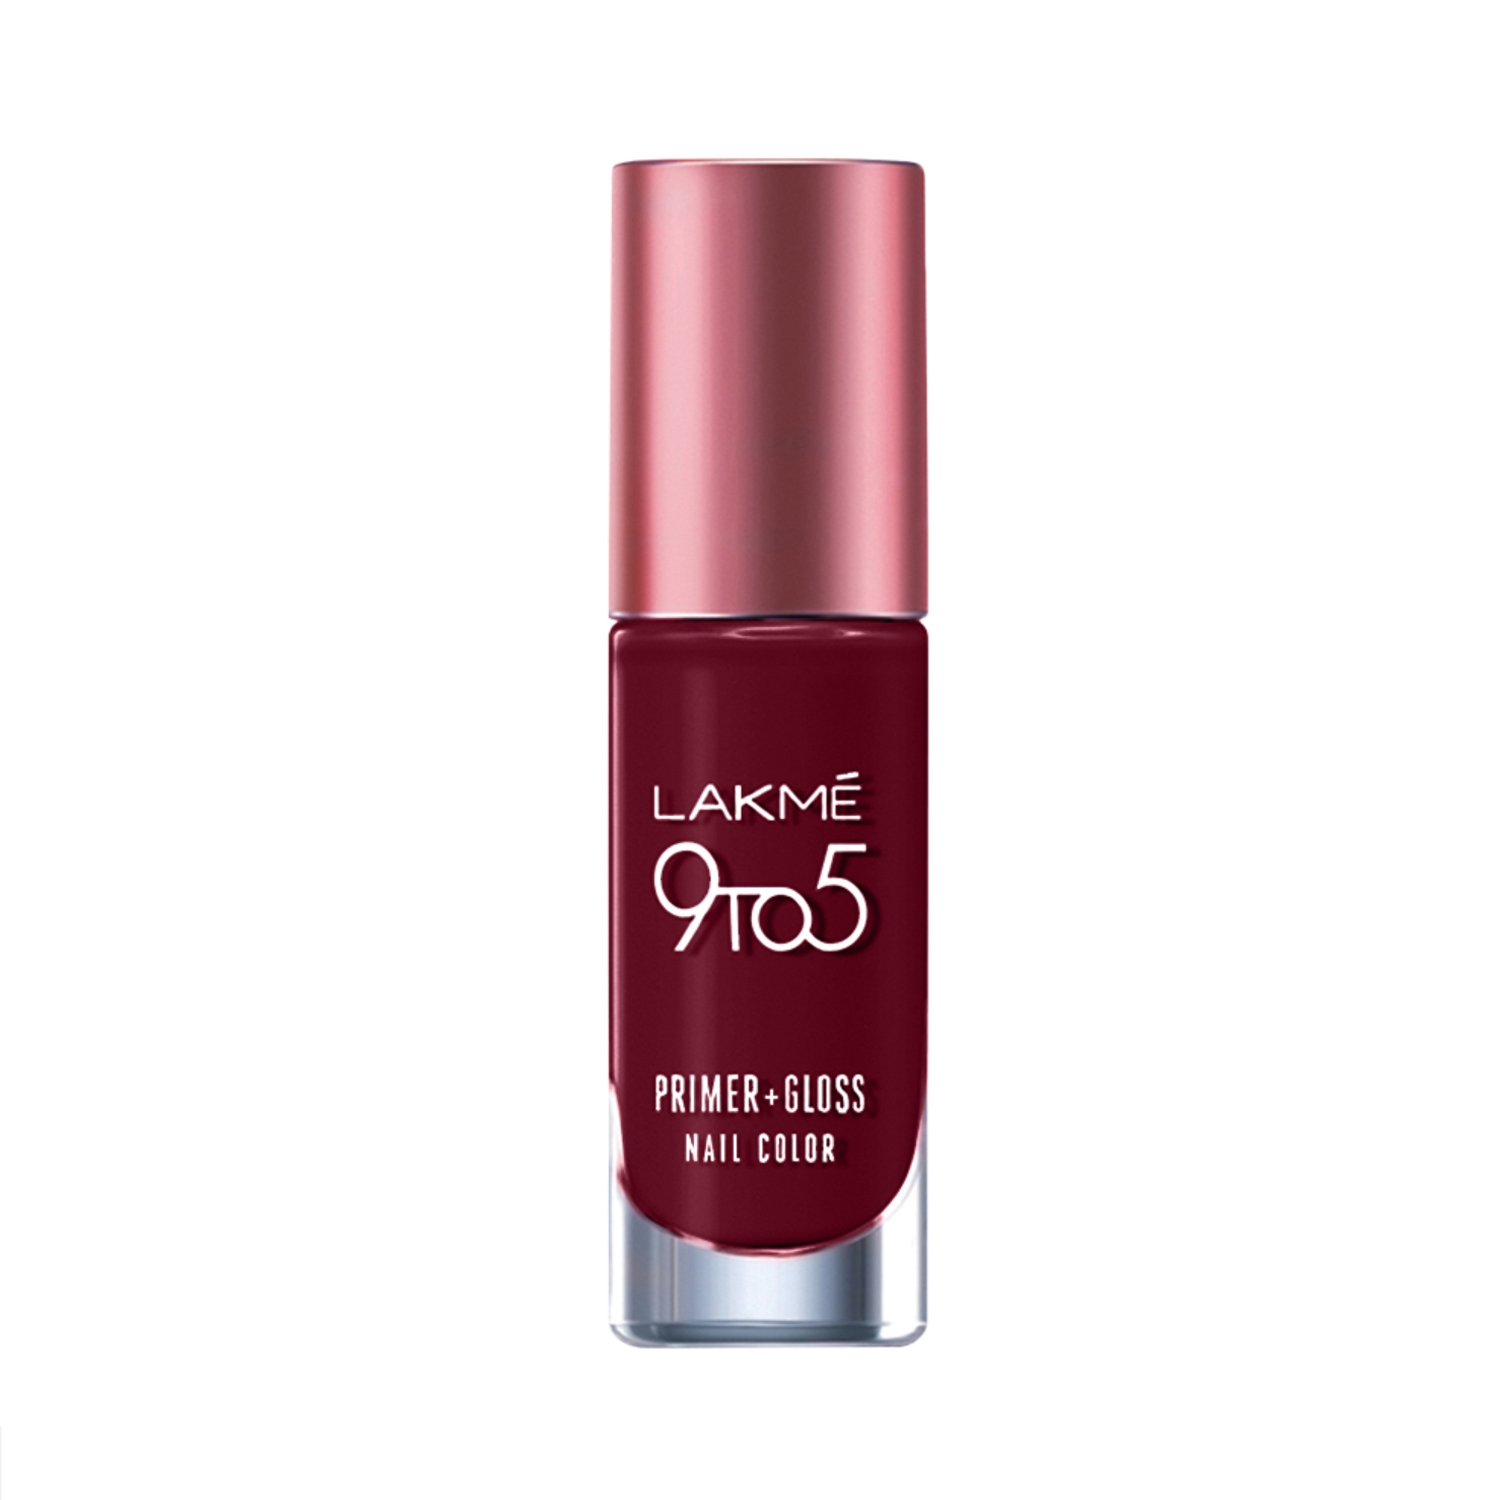 Lakme | Lakme 9 To 5 Primer + Gloss Nail Color - Smokey Crimson (6ml)